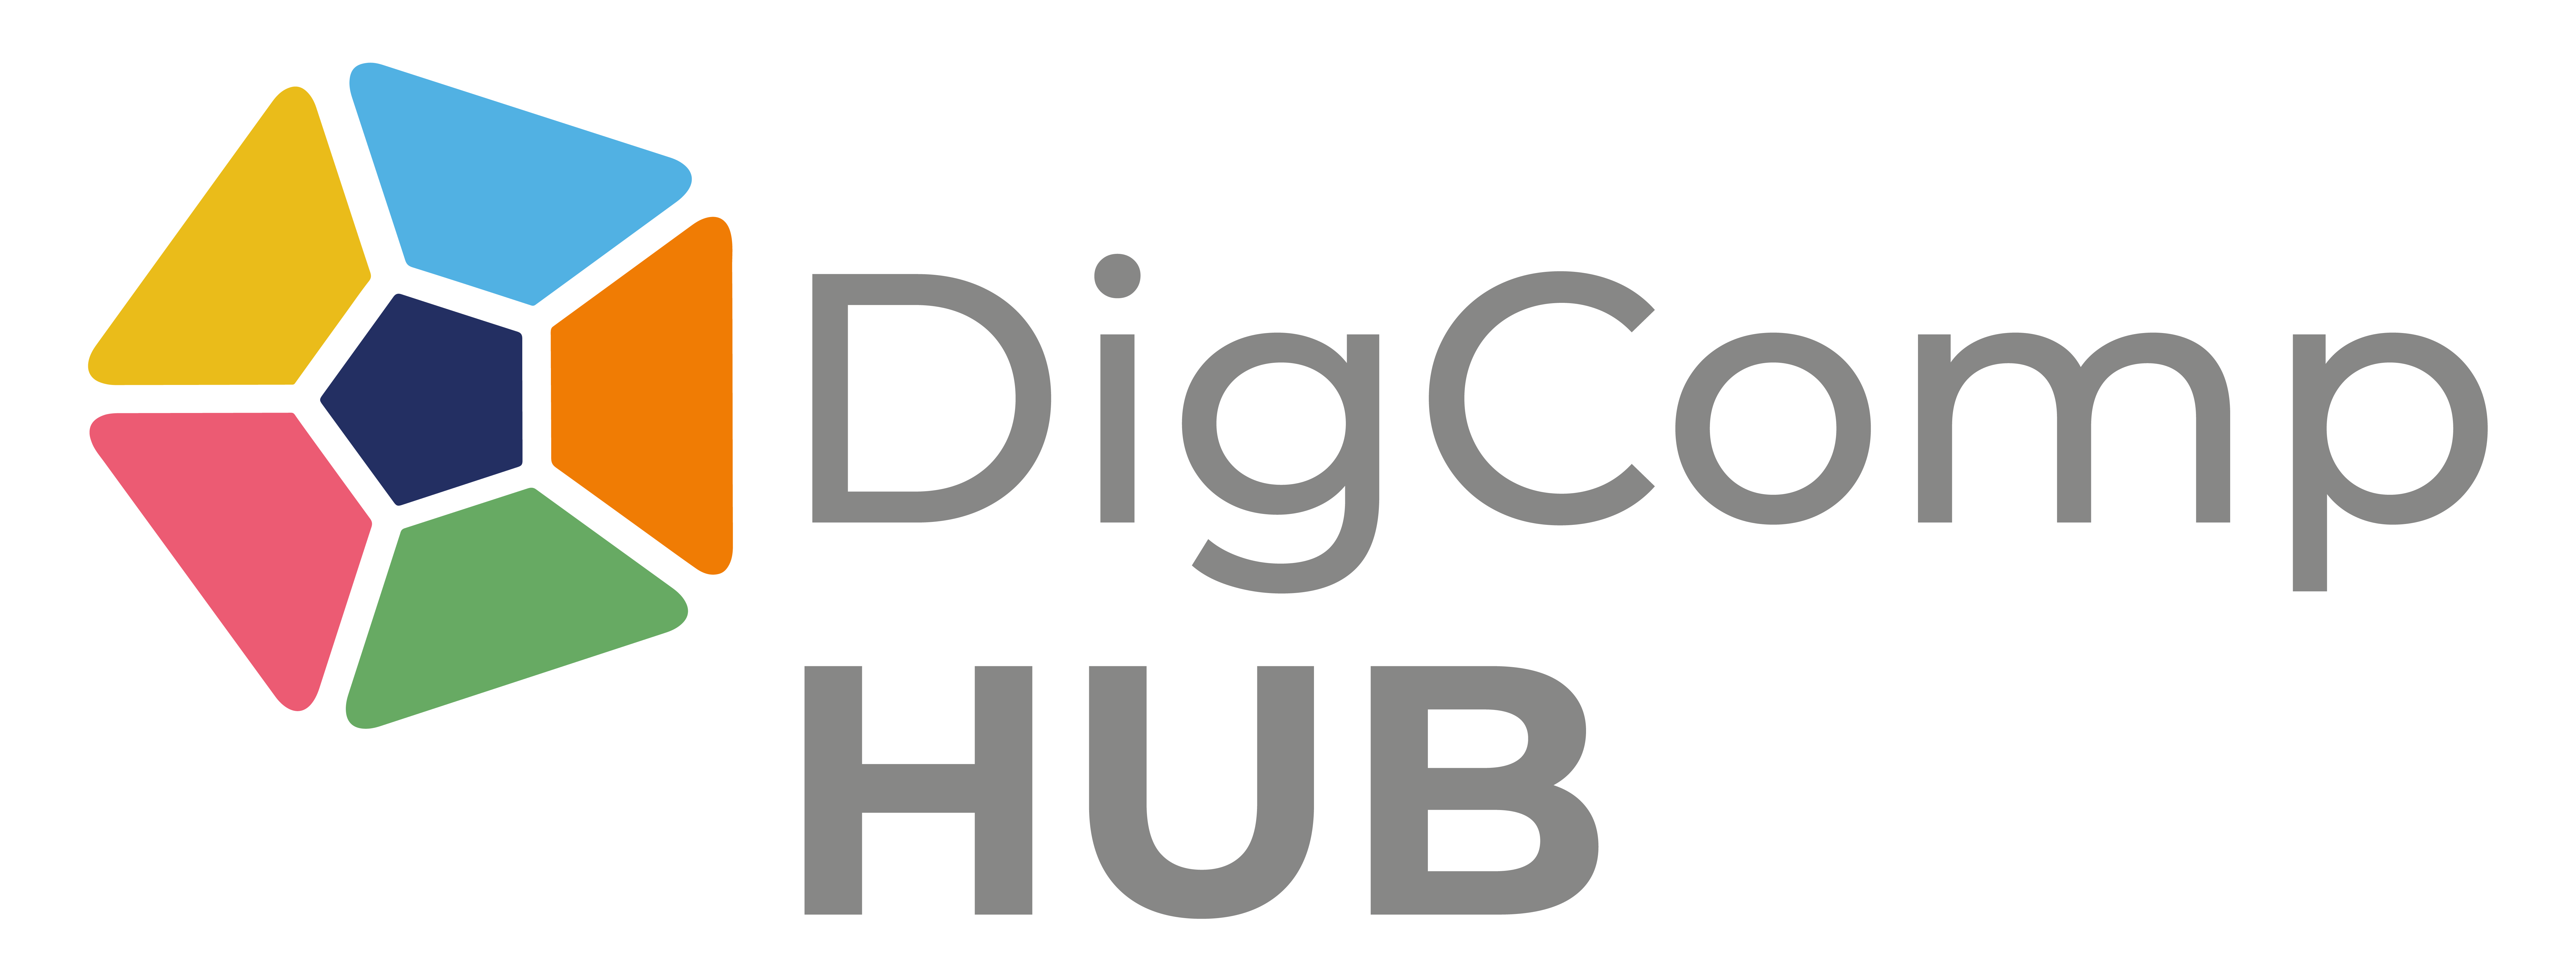 DigCompHub Project